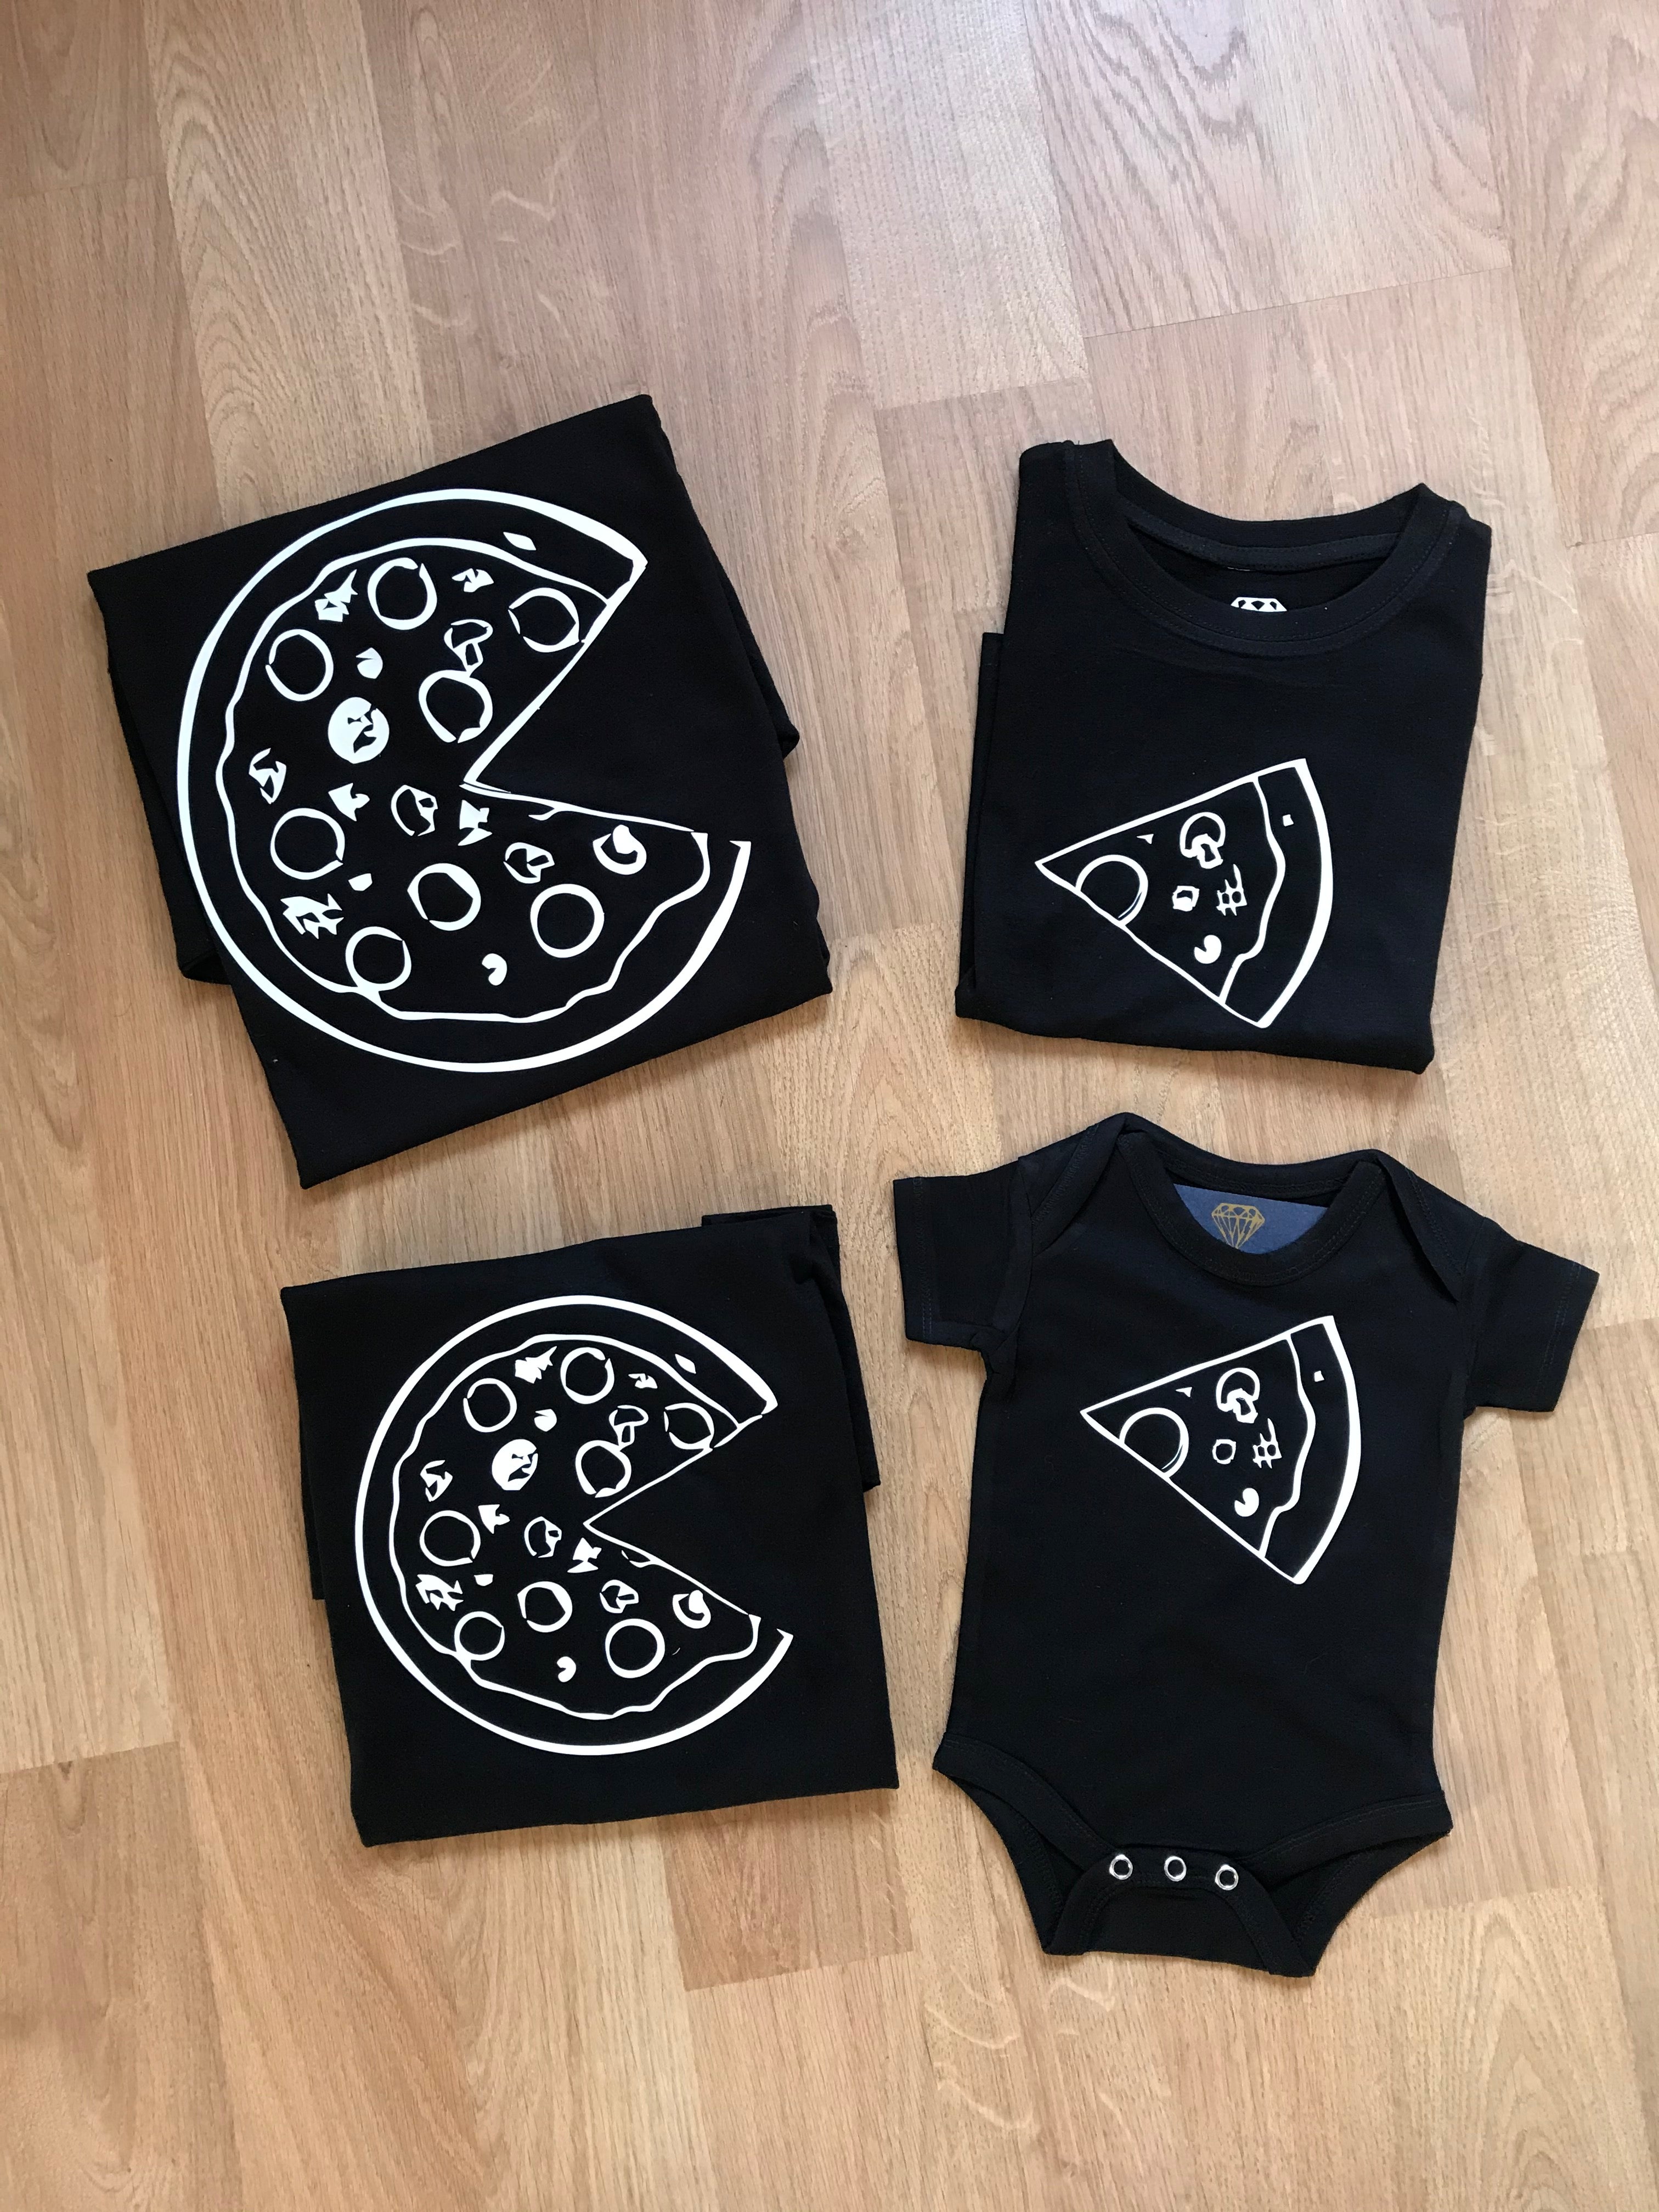 Pizza Kids Boy Girl cotton t shirt-Kids T shirts-DiamondsKT